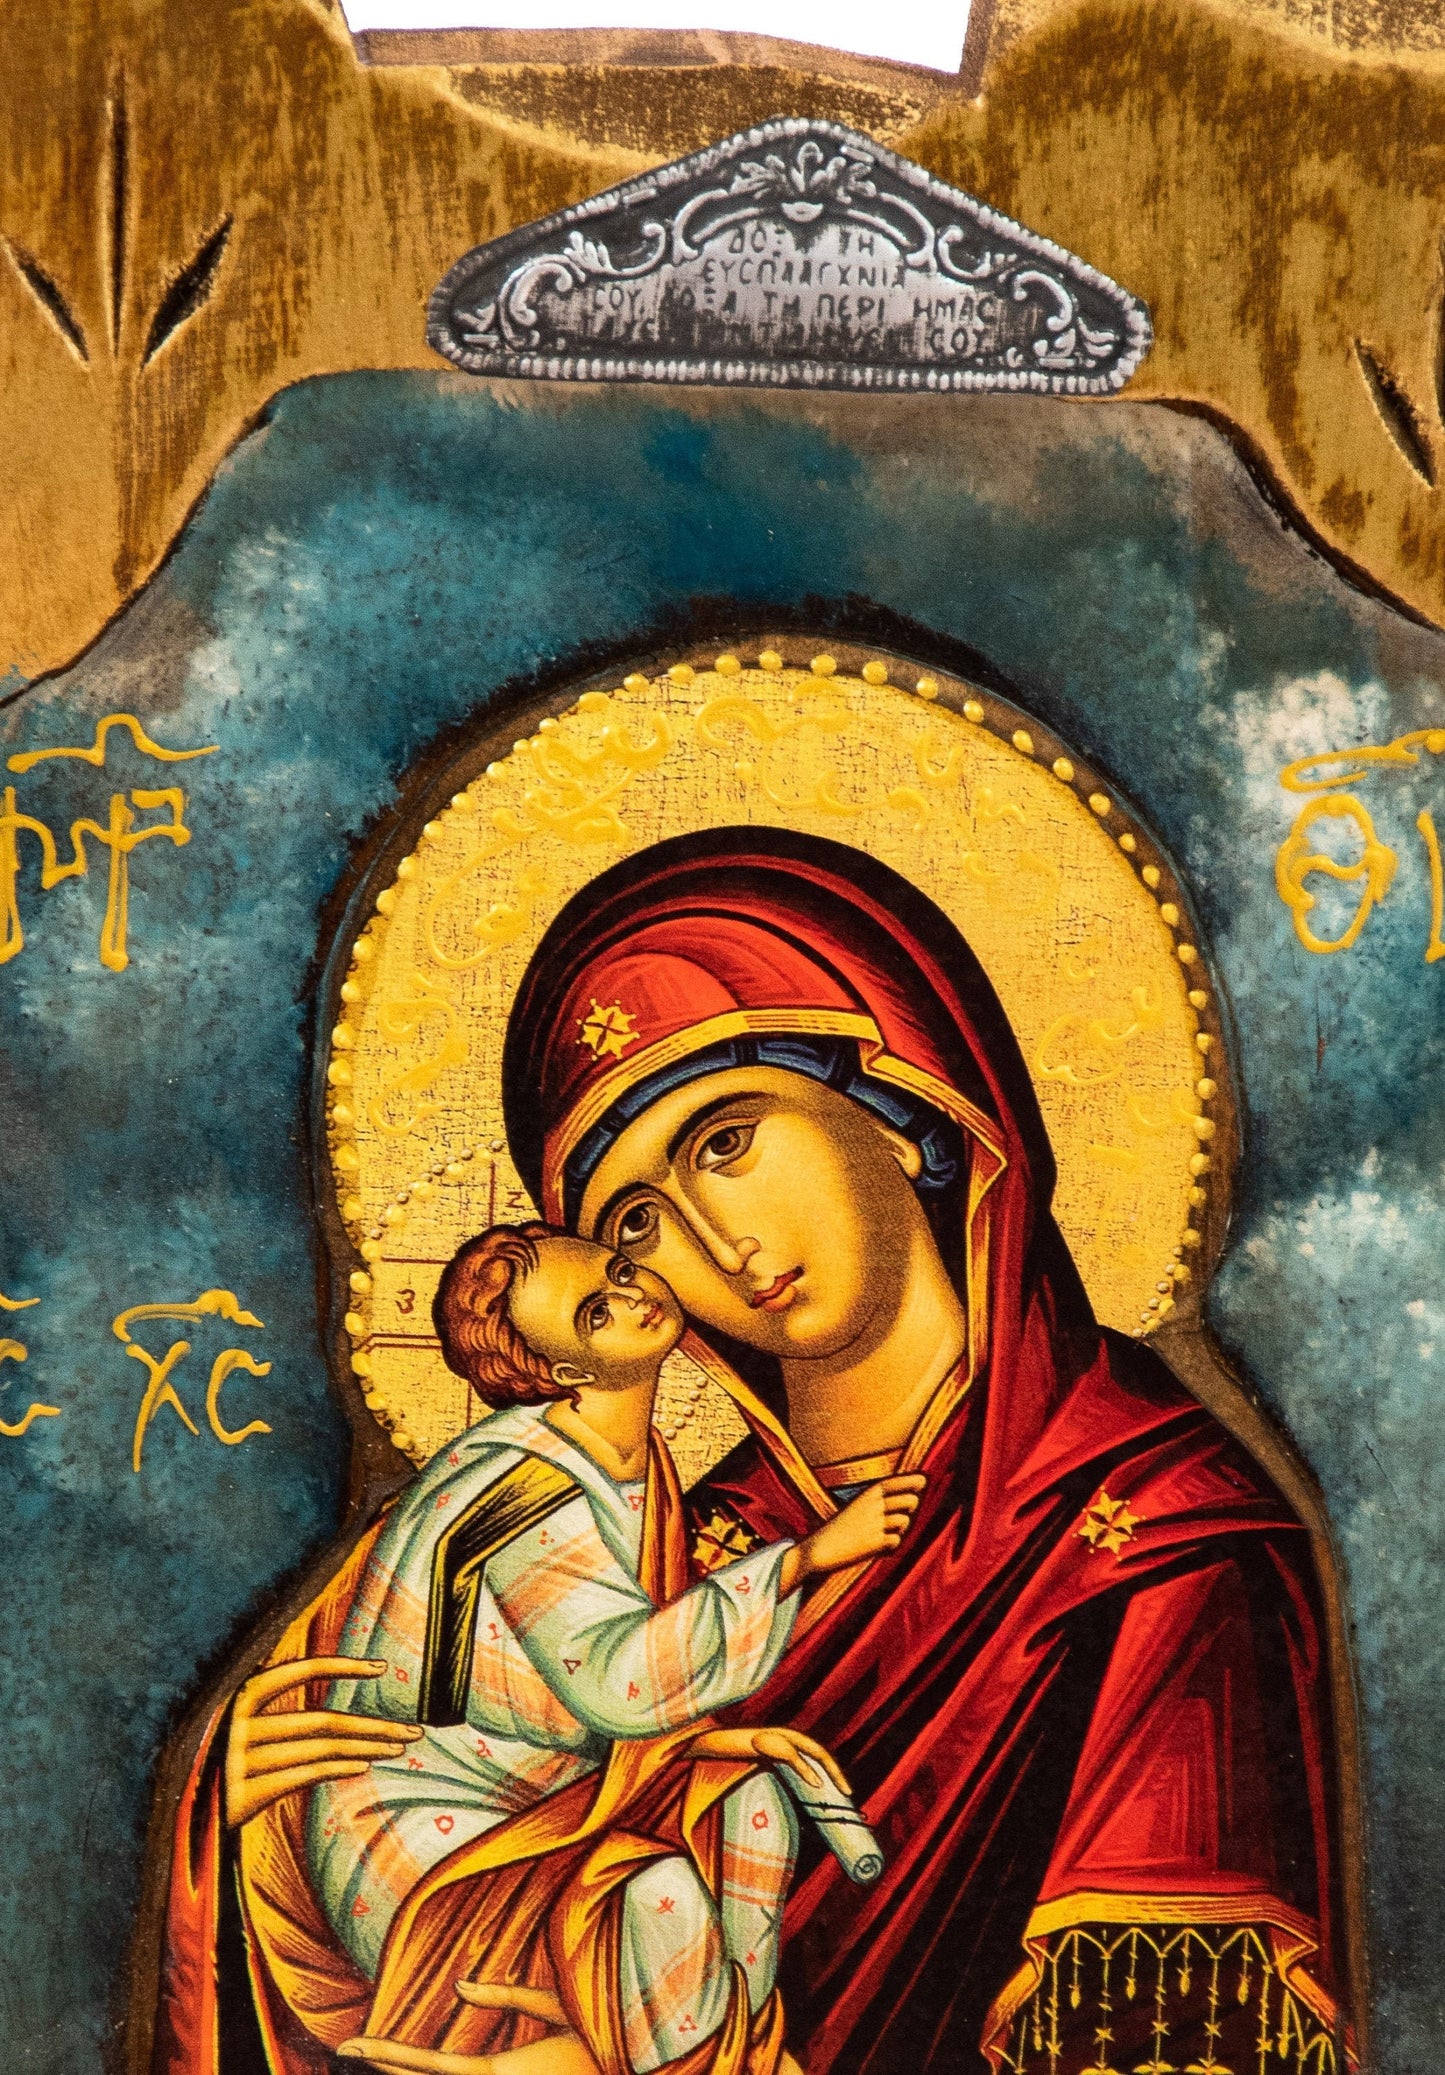 Virgin Mary icon Panagia, Handmade Greek Orthodox icon of Theotokos, Byzantine art wall hanging wood plaque icon 30x20cm, religious decor TheHolyArt